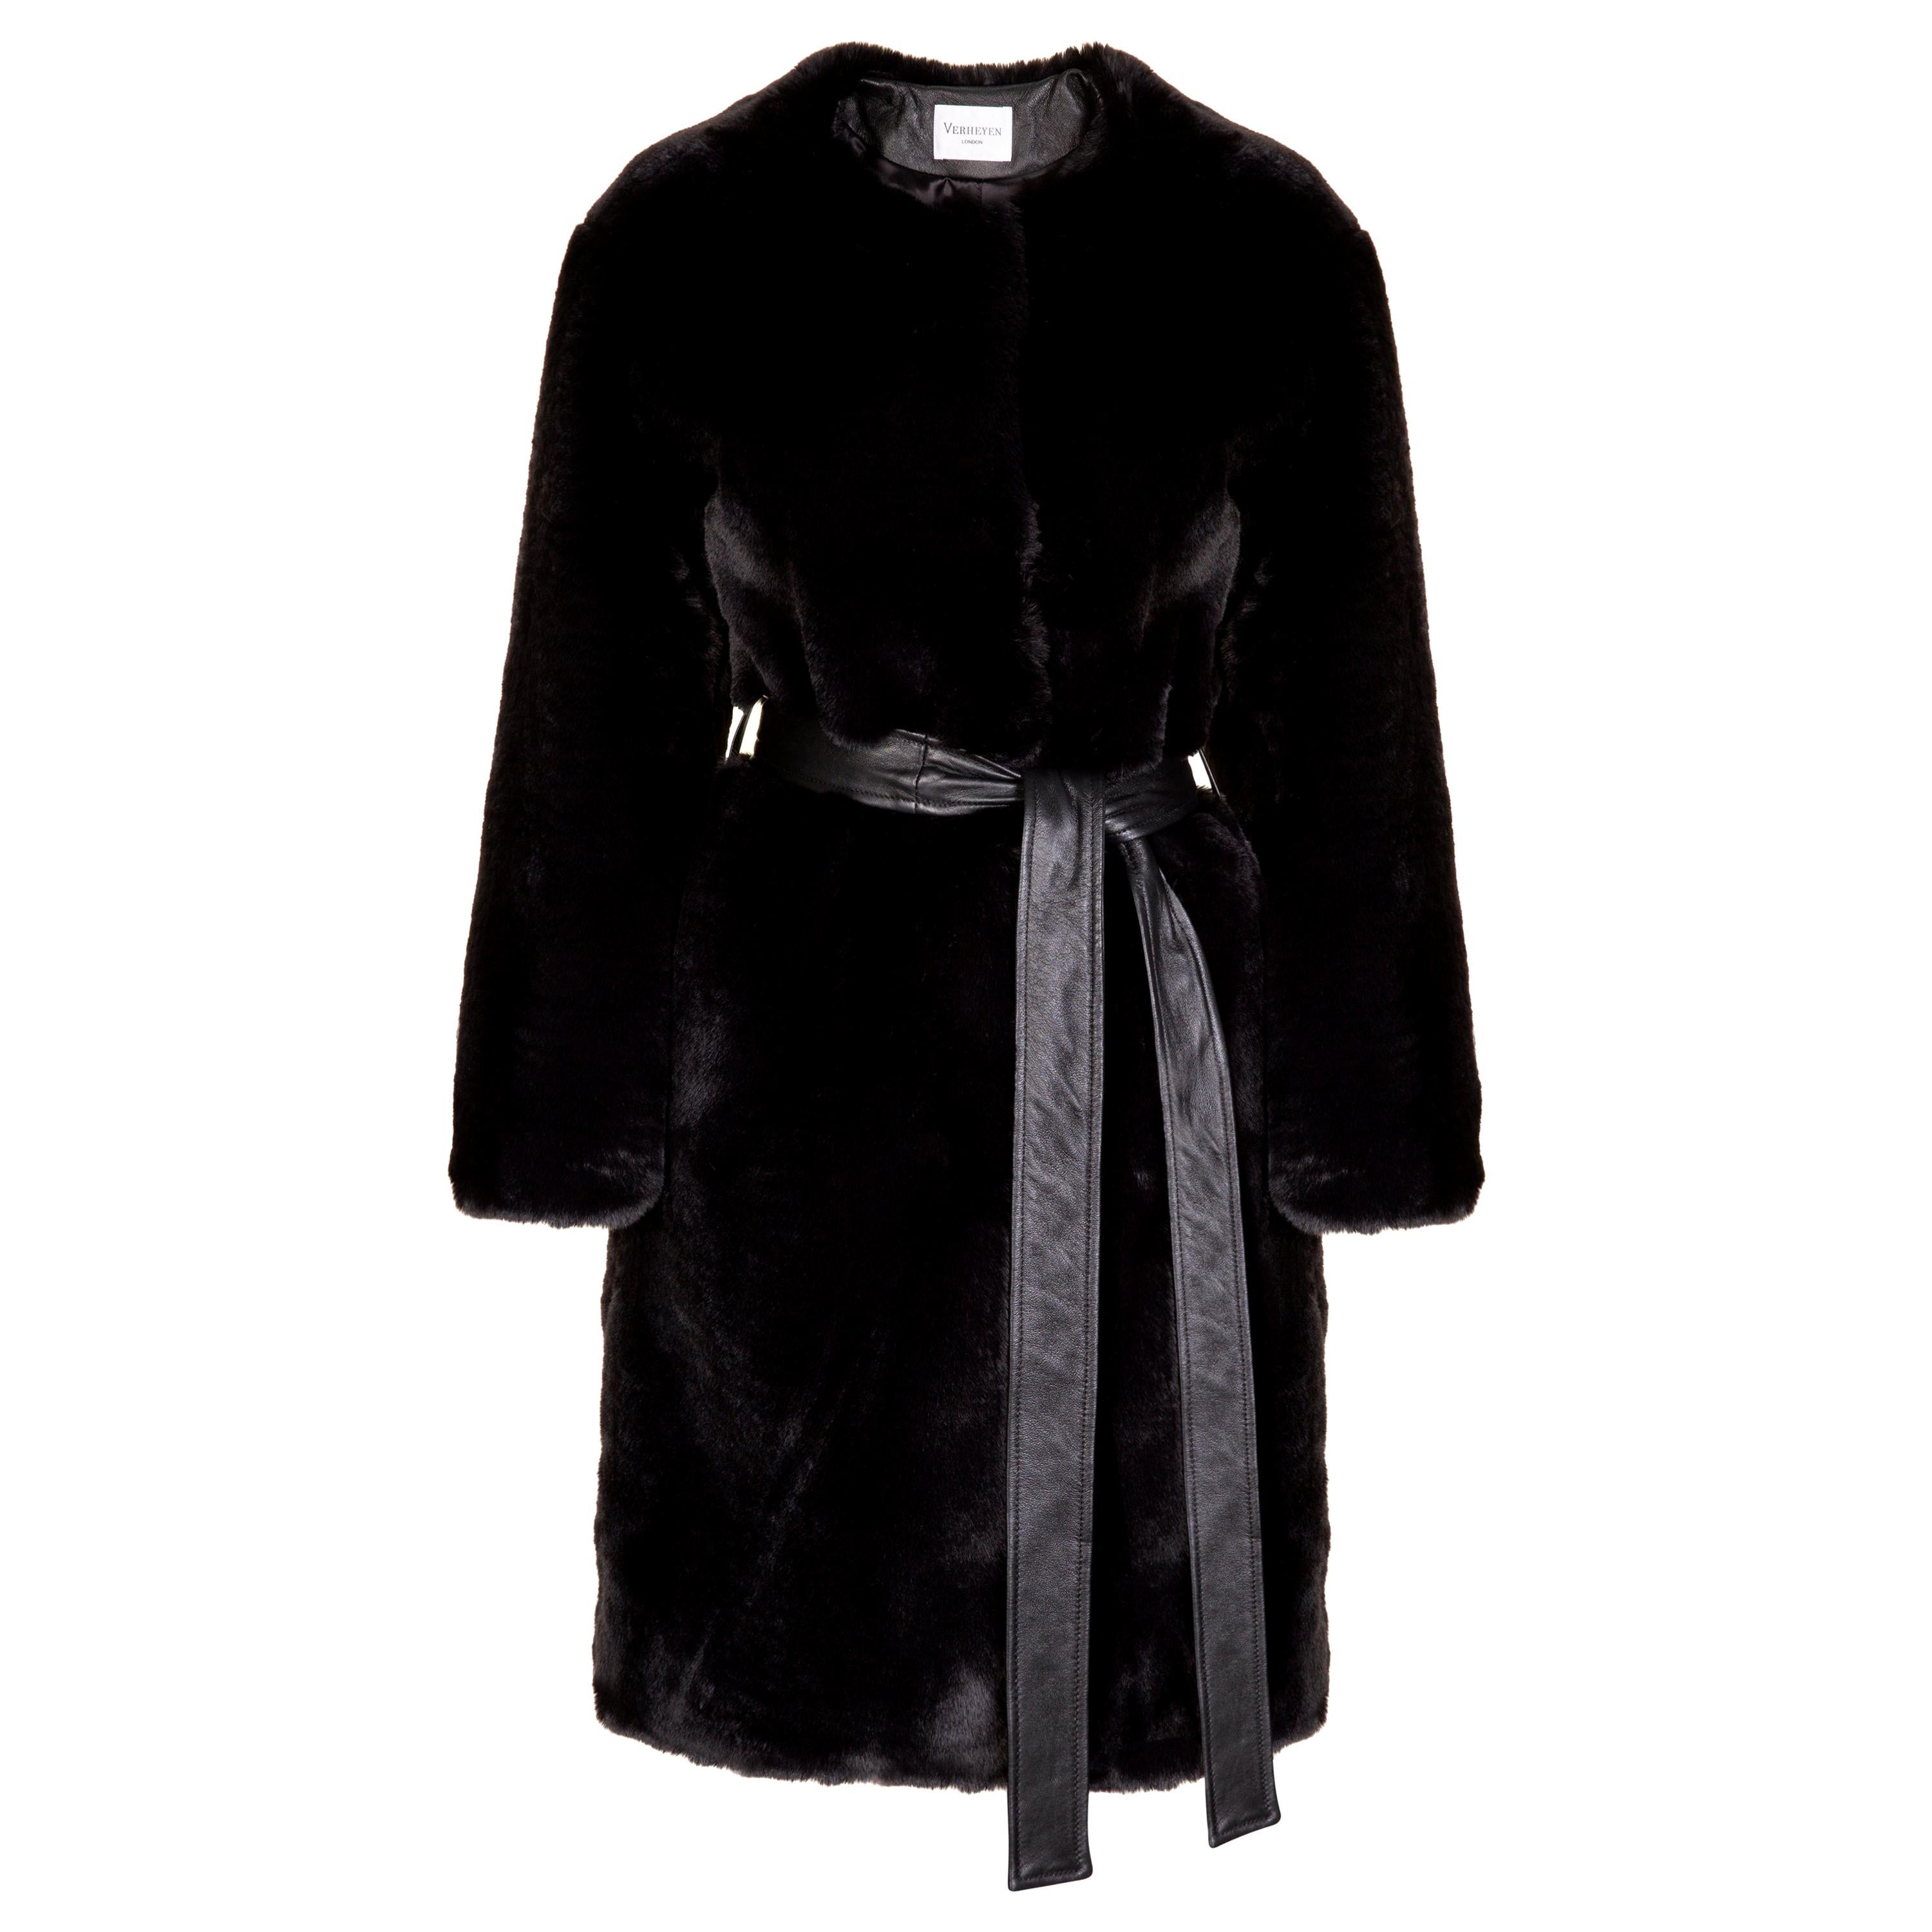 Verheyen London Serena  Collarless Faux Fur Coat in Black - Size uk 8 